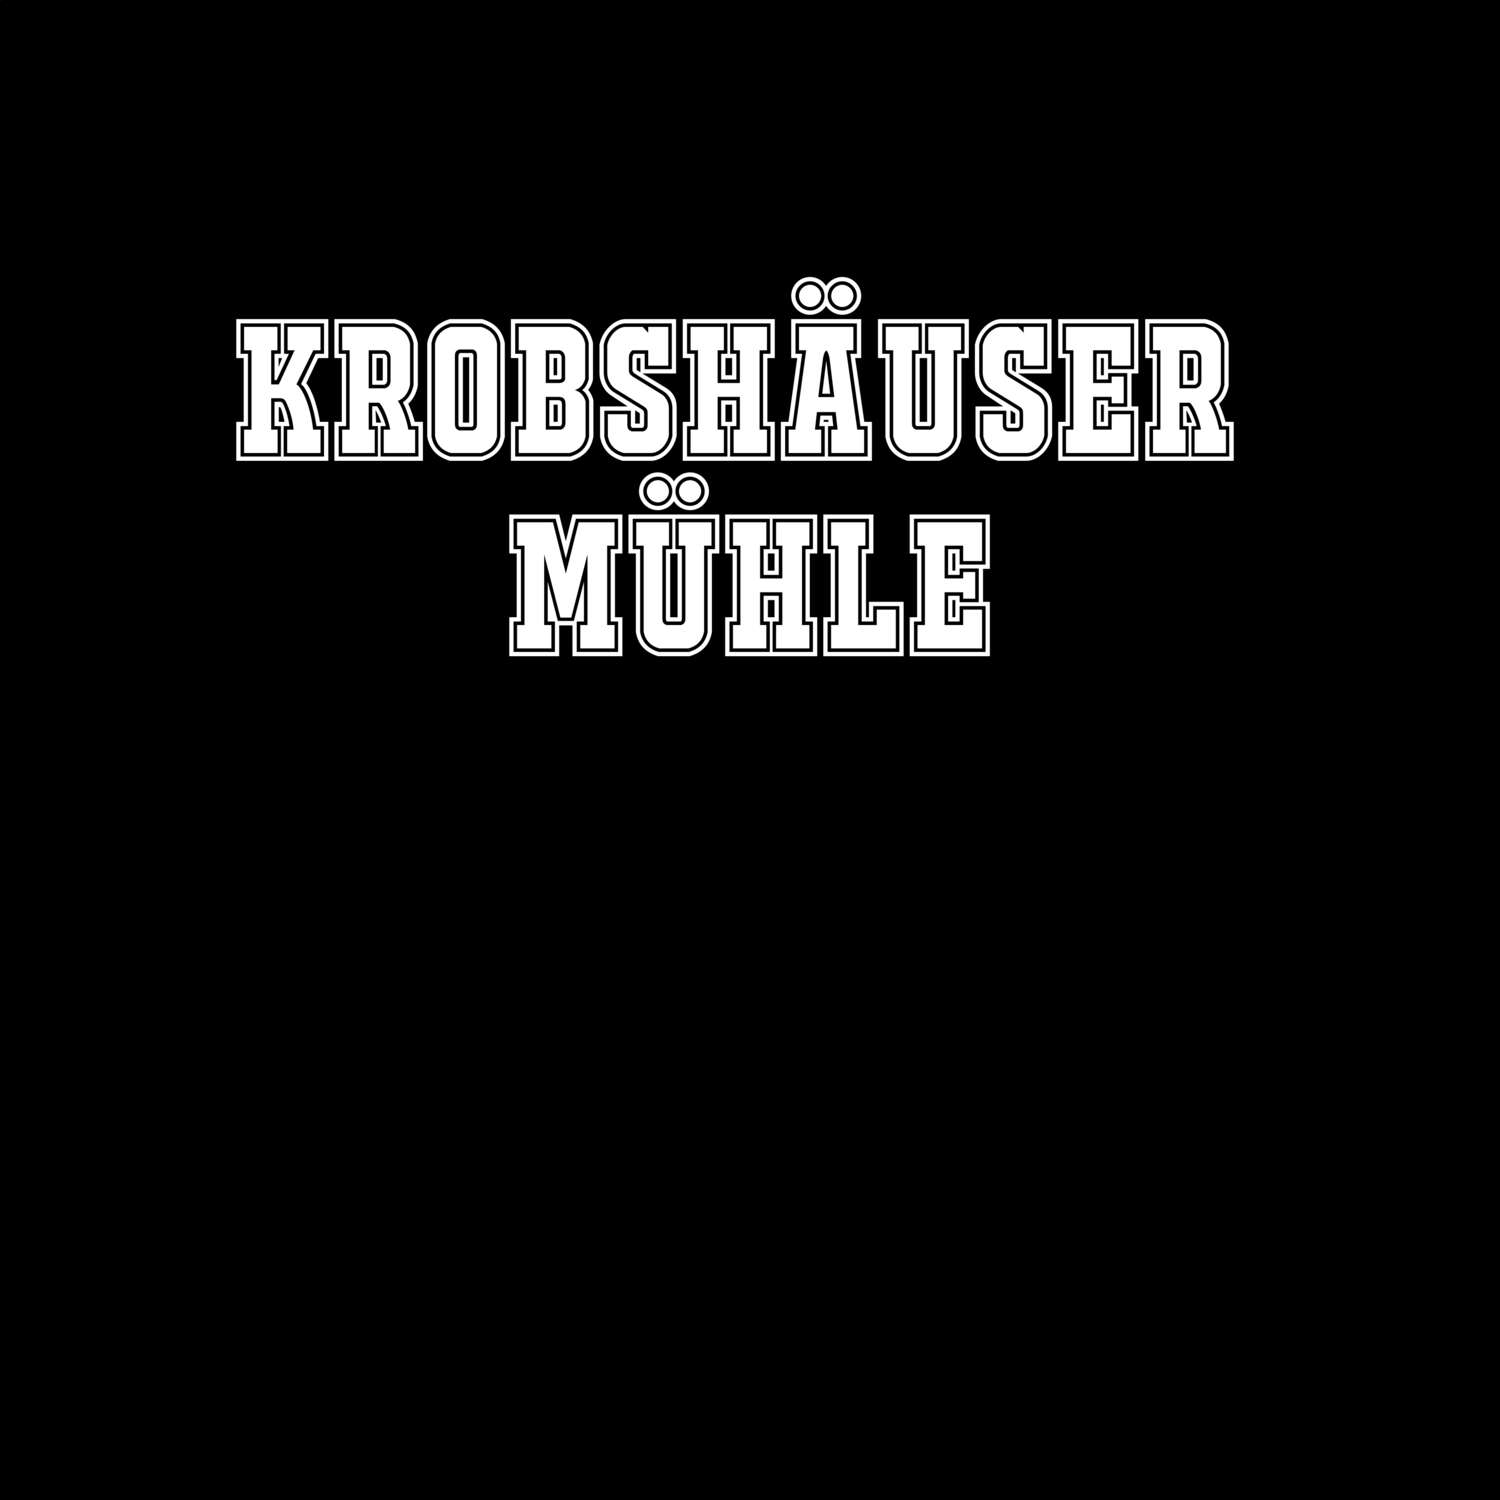 Krobshäuser Mühle T-Shirt »Classic«